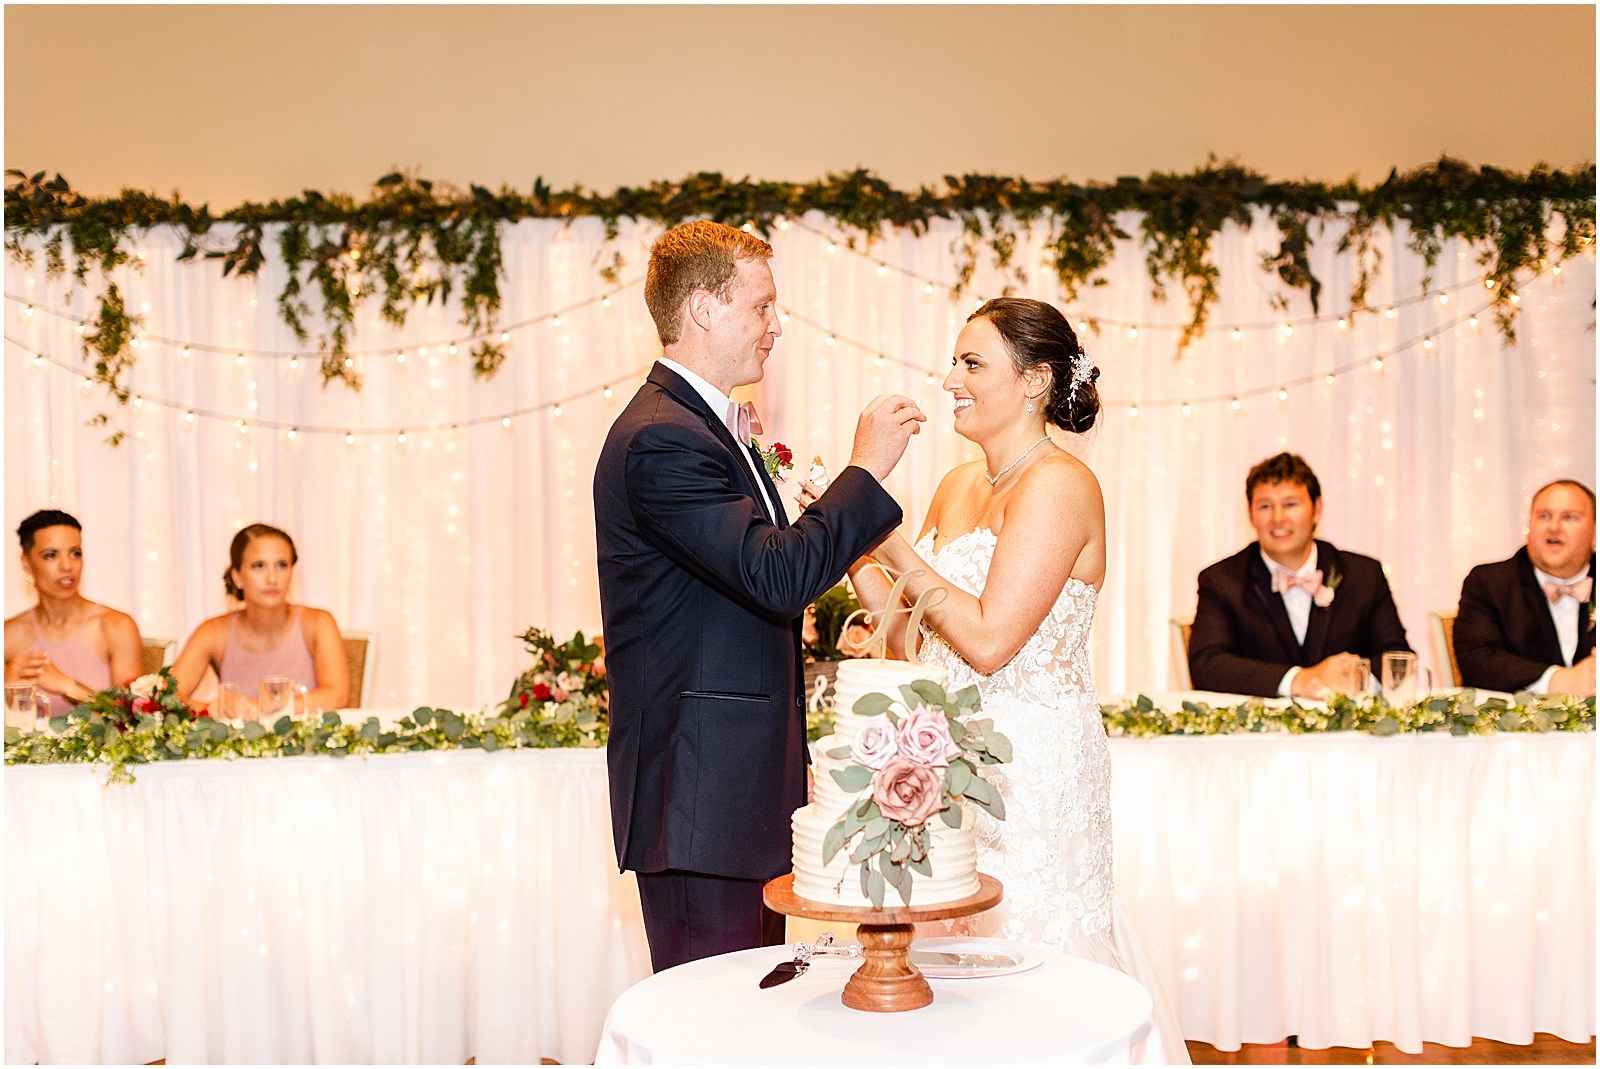 Deidra and Andrew | A Huntingburgh Indiana Wedding Bret and Brandie | Evansville Photographers | @bretandbrandie-0142.jpg